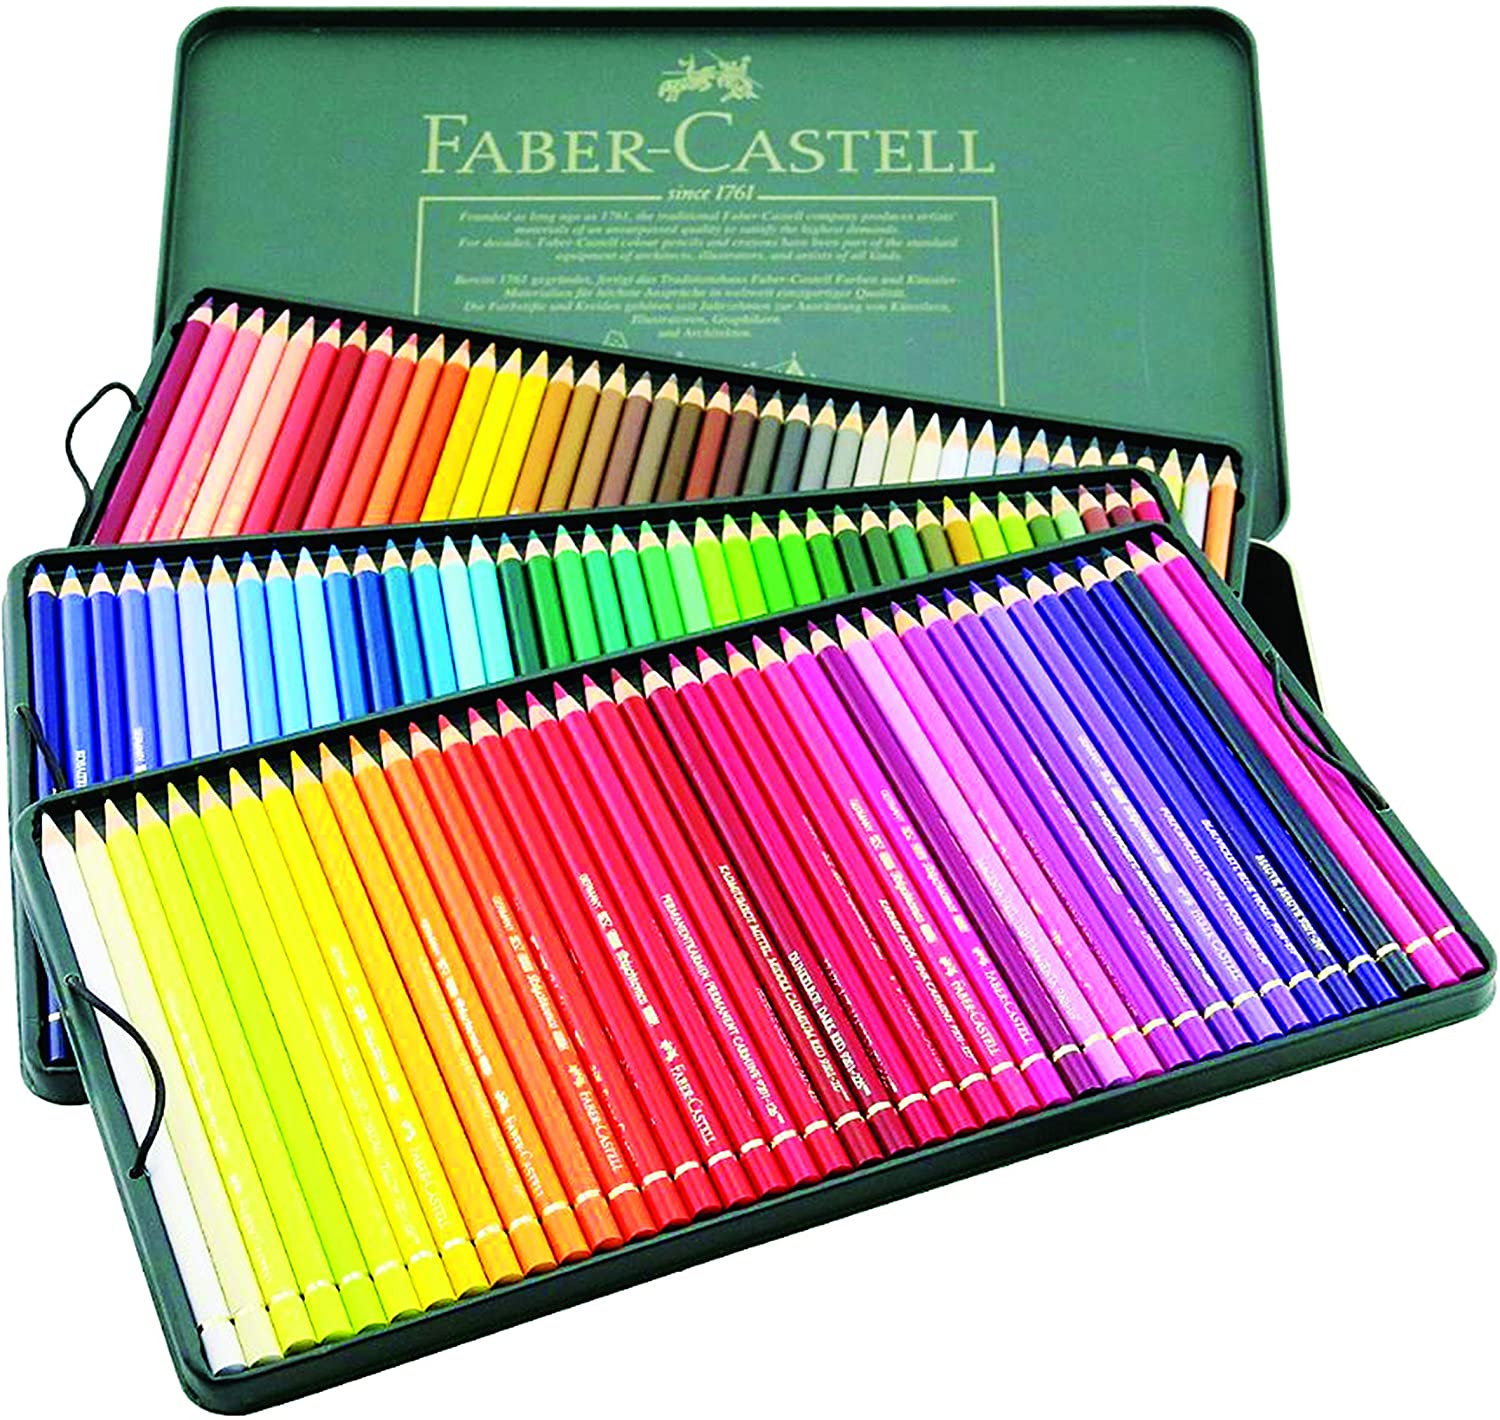 Faber-Castell Polychromos Artist Colored Pencils Set case open close up